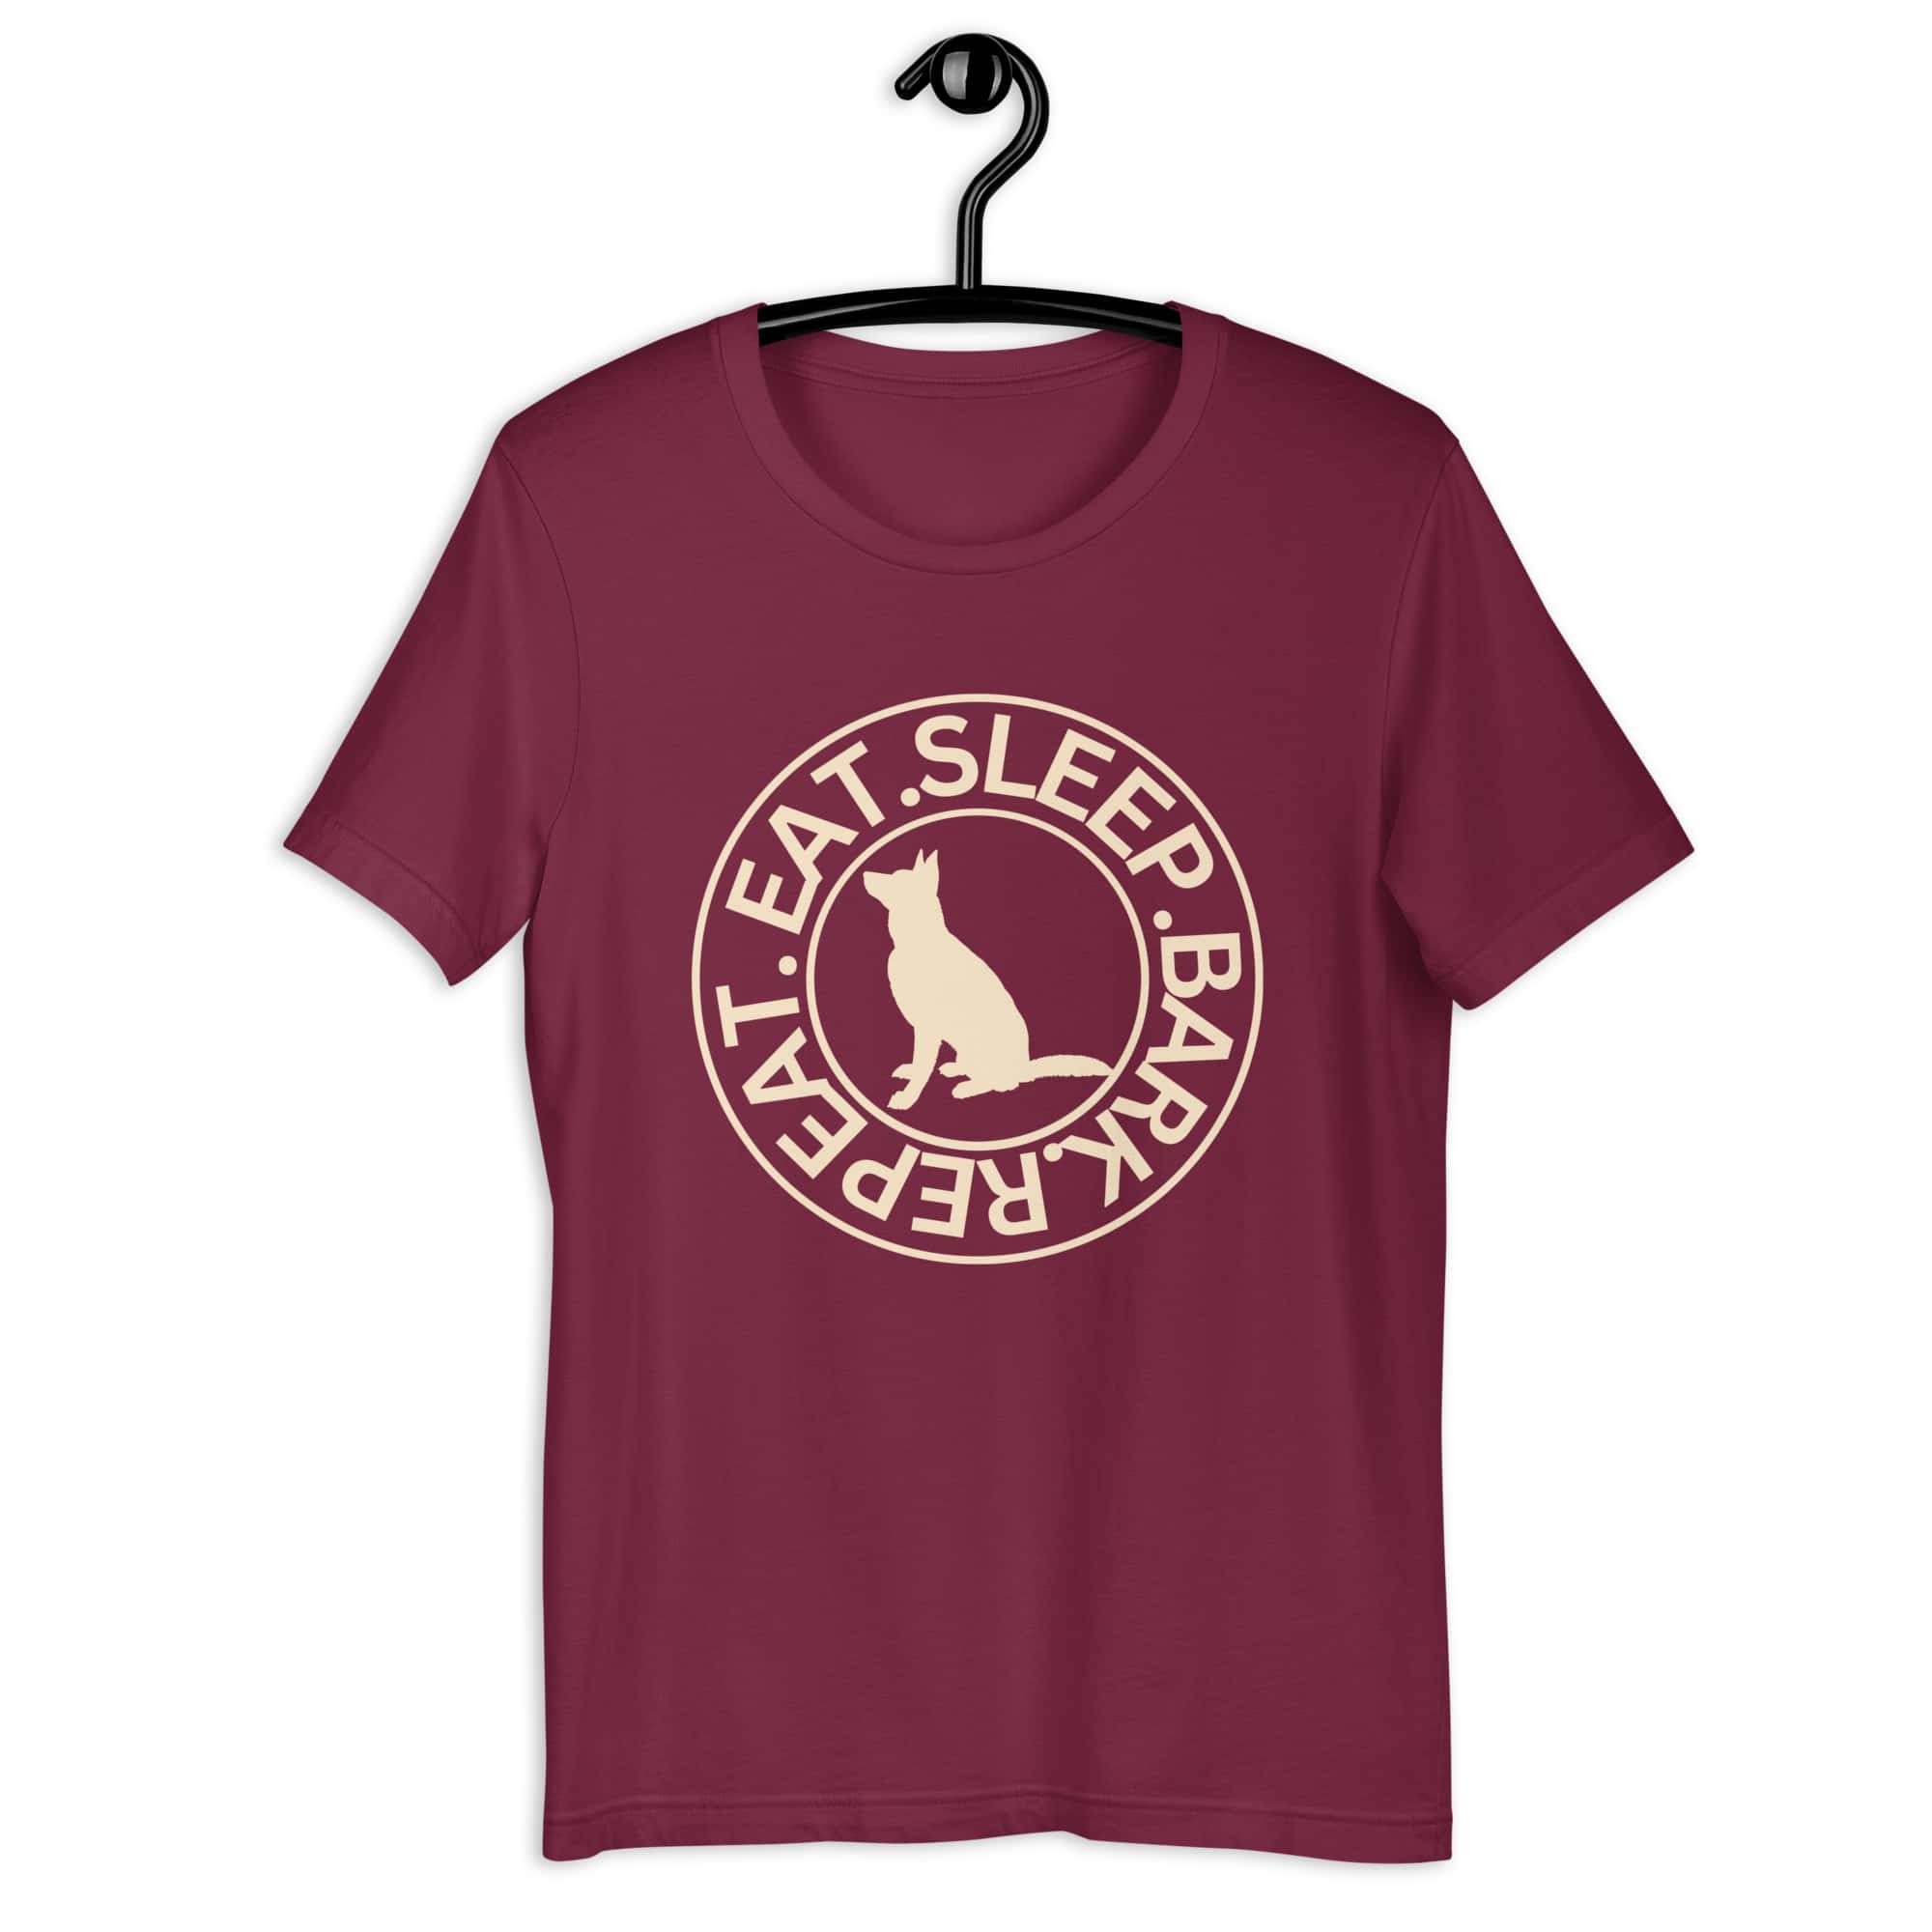 Eat Sleep Bark Repeat German Shepherd Unisex T-Shirt. Maroon